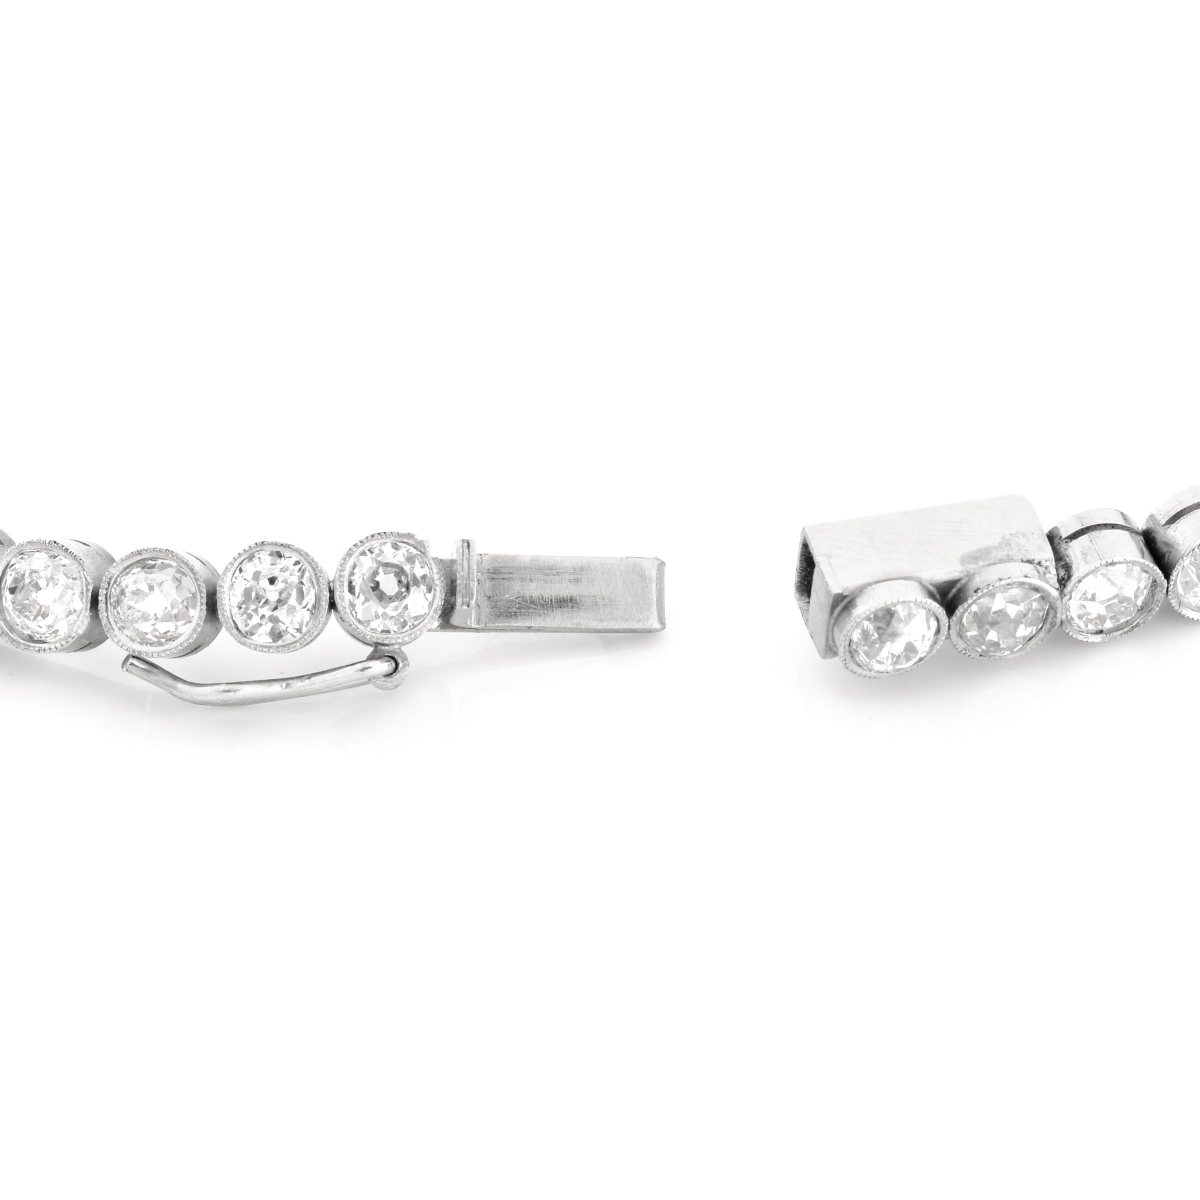 14.0 Carat Diamond and Platinum Bracelet